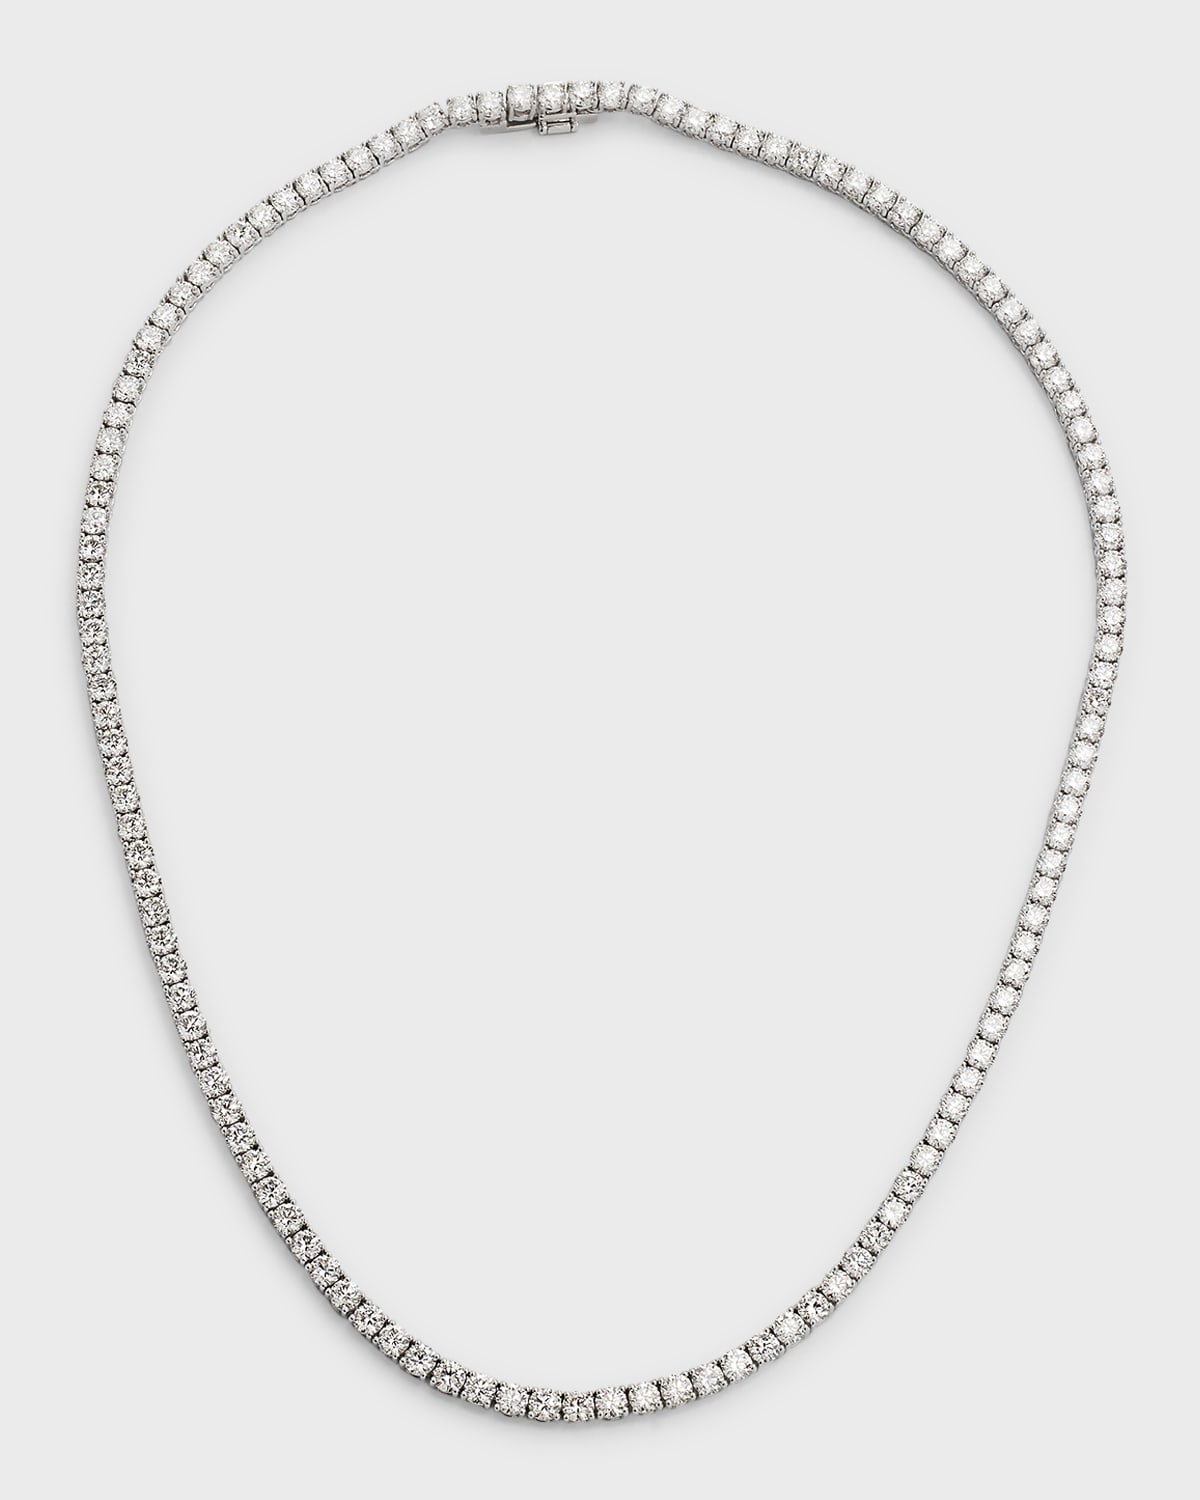 Neiman Marcus Diamonds 18k White Gold Diamond Tennis Necklace